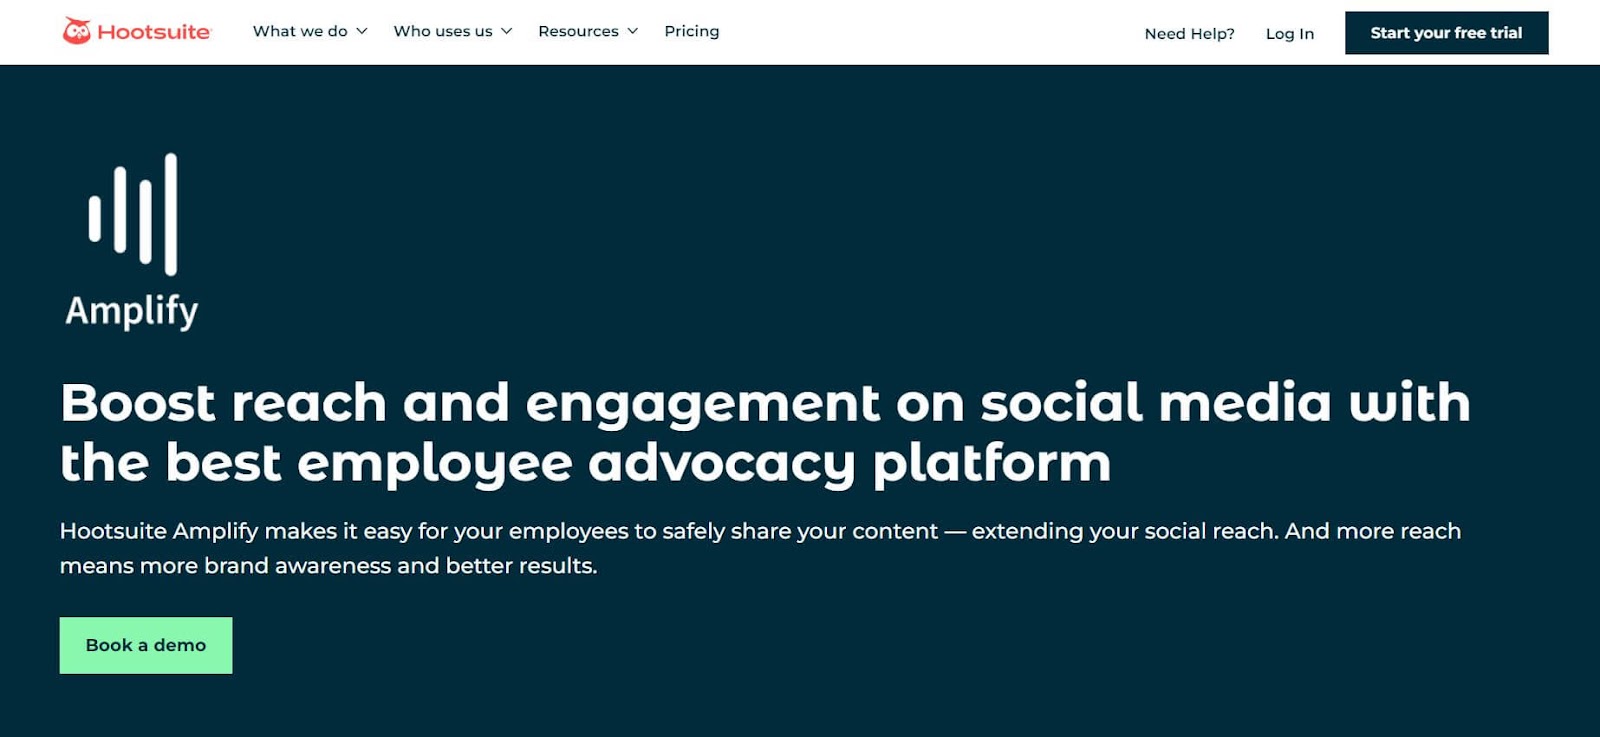 HootSuite: Free Brand Ambassador Management Platform
